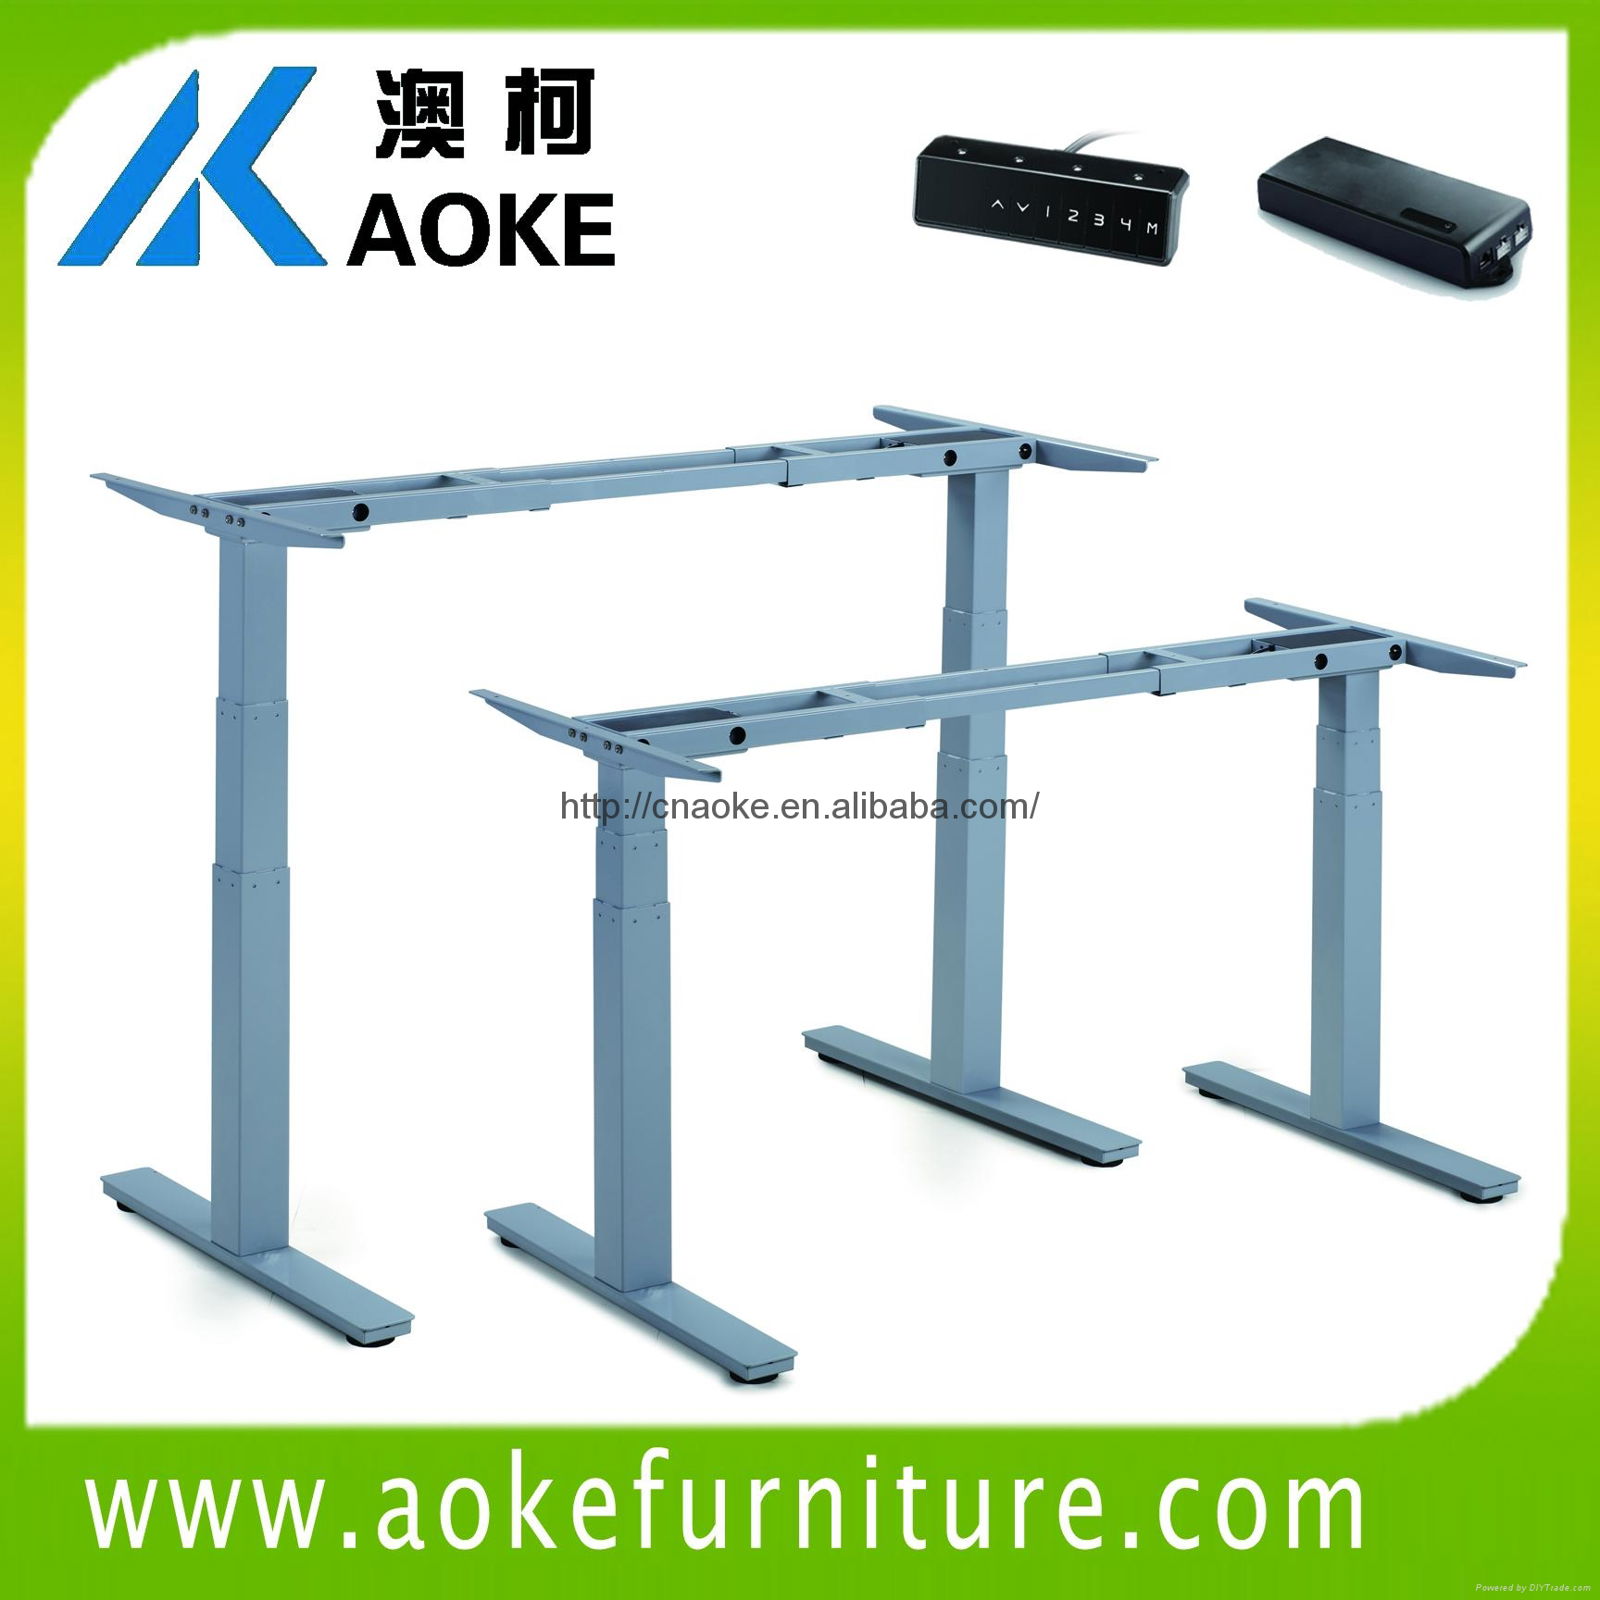 AOKE AK2RT-ZF2 adjustable height table 4